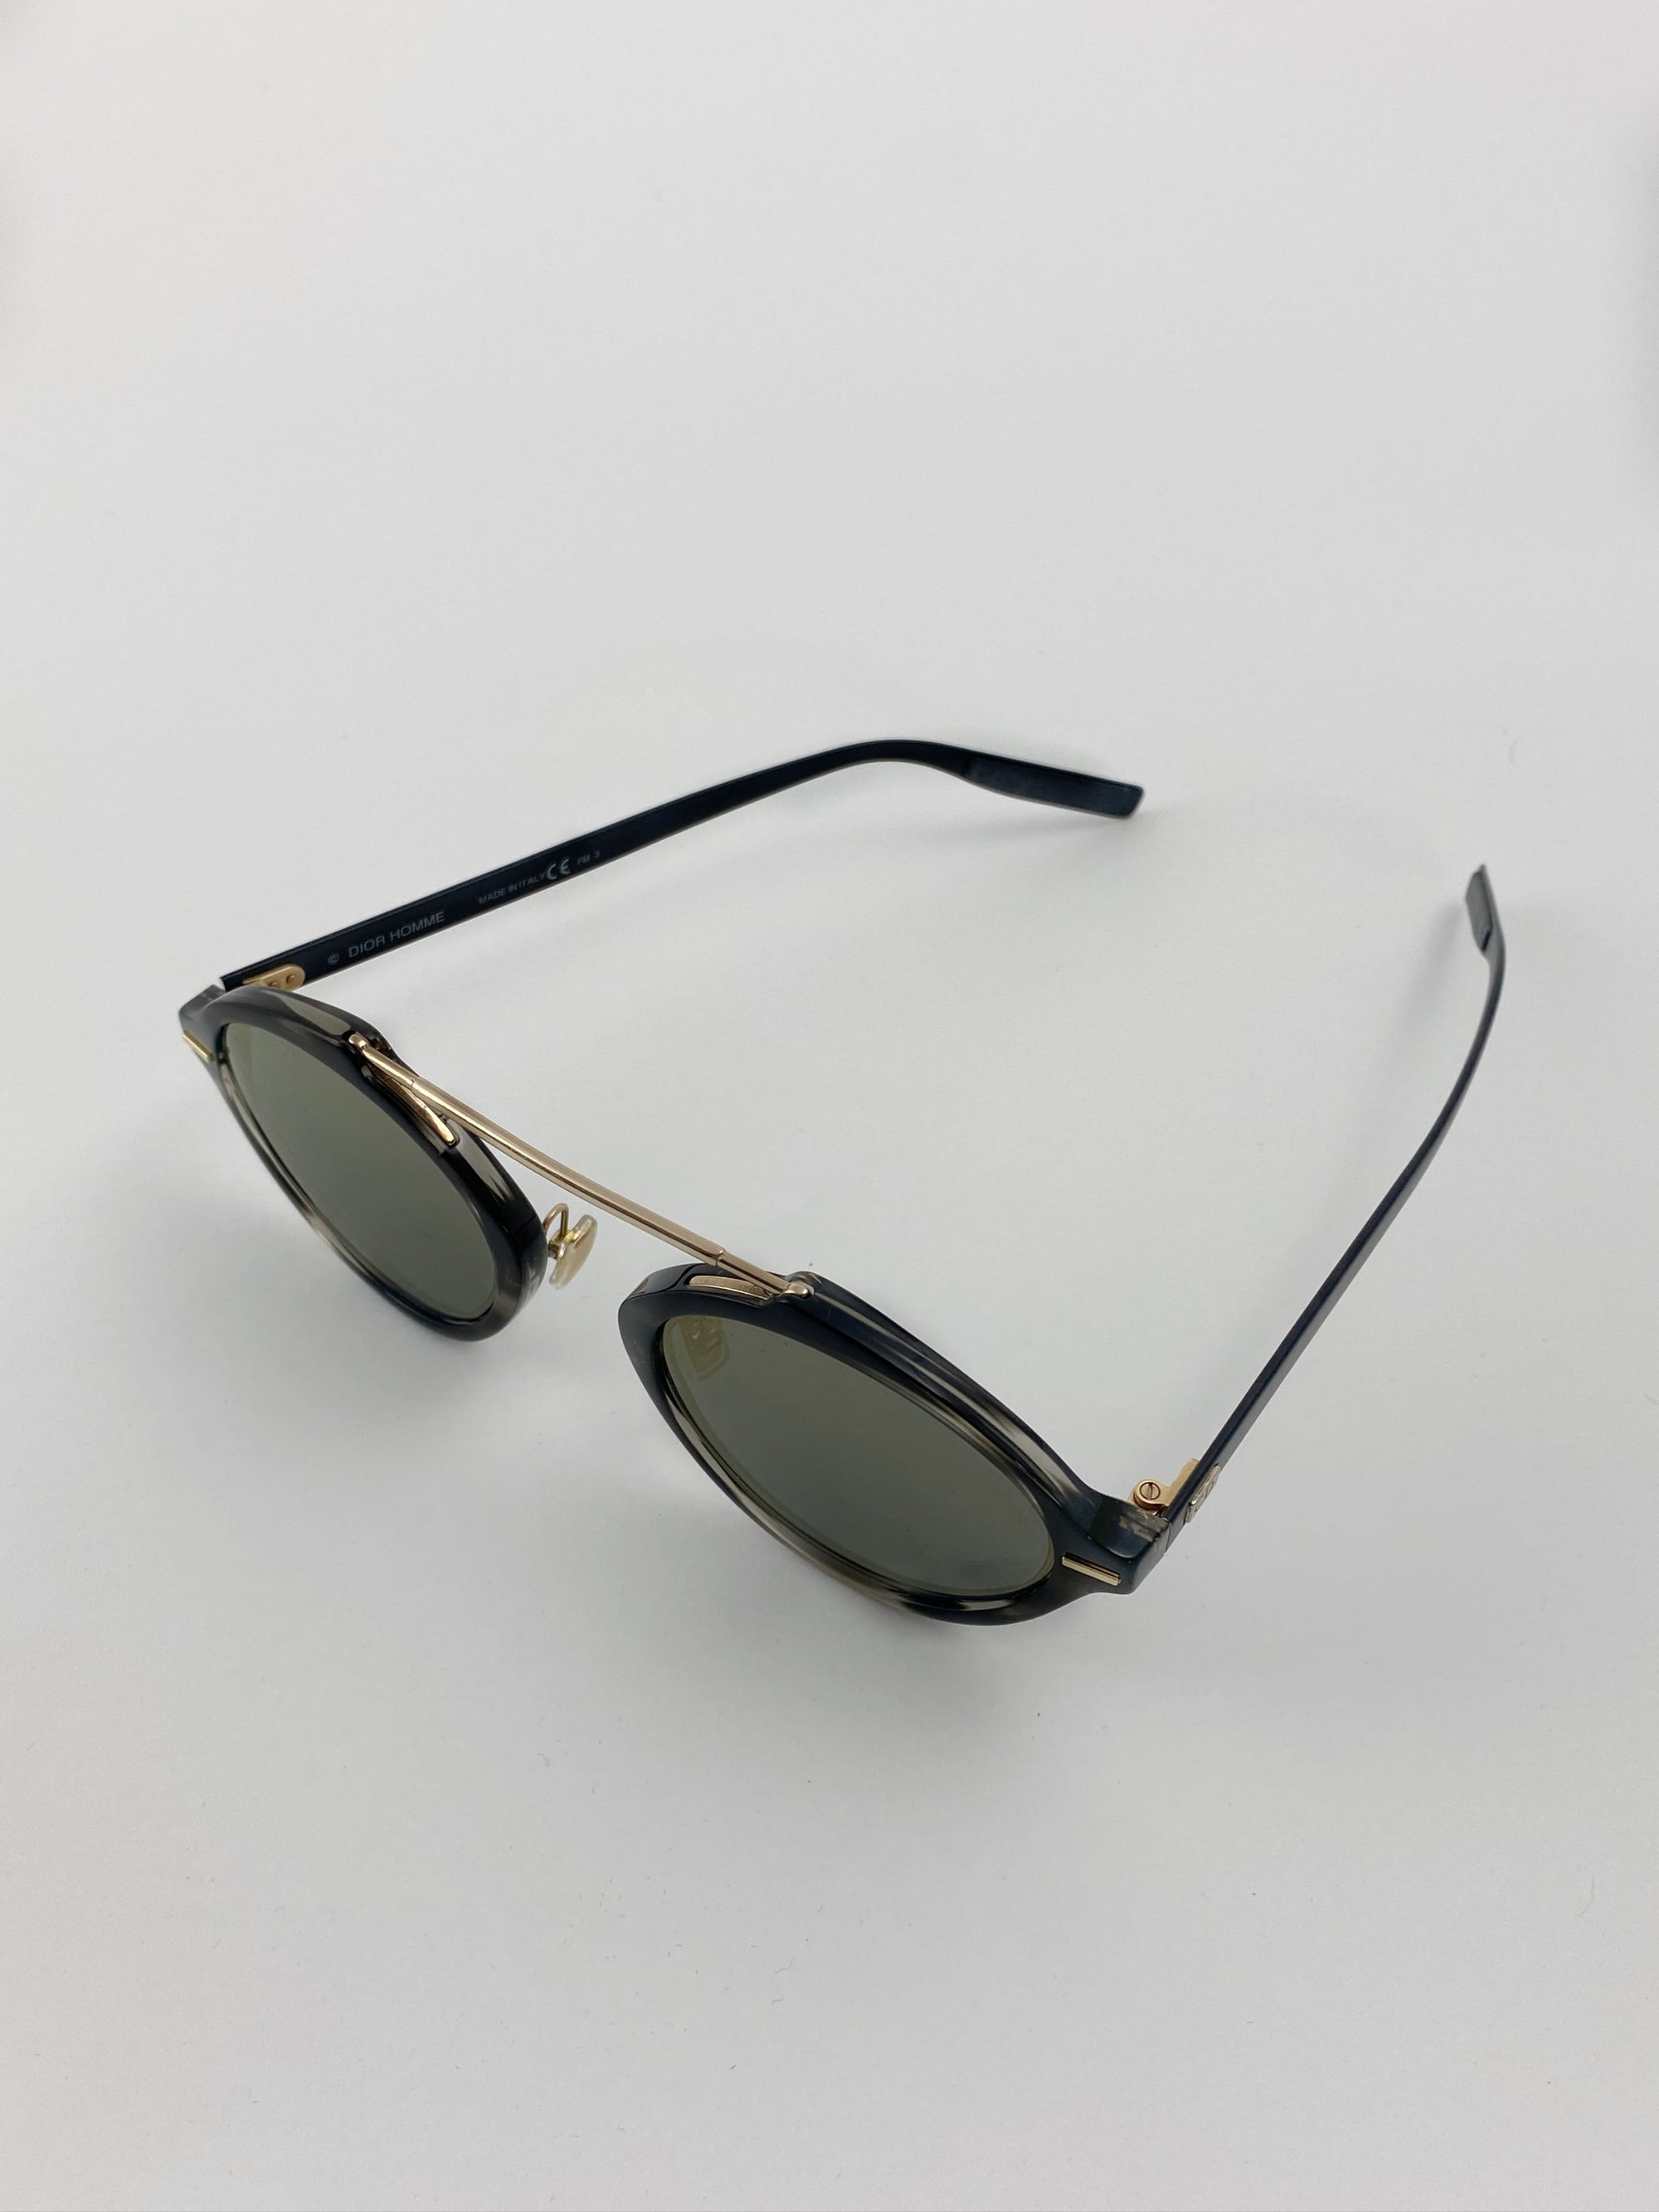 Dior Sunglasses golden black 2OSJO4923 150